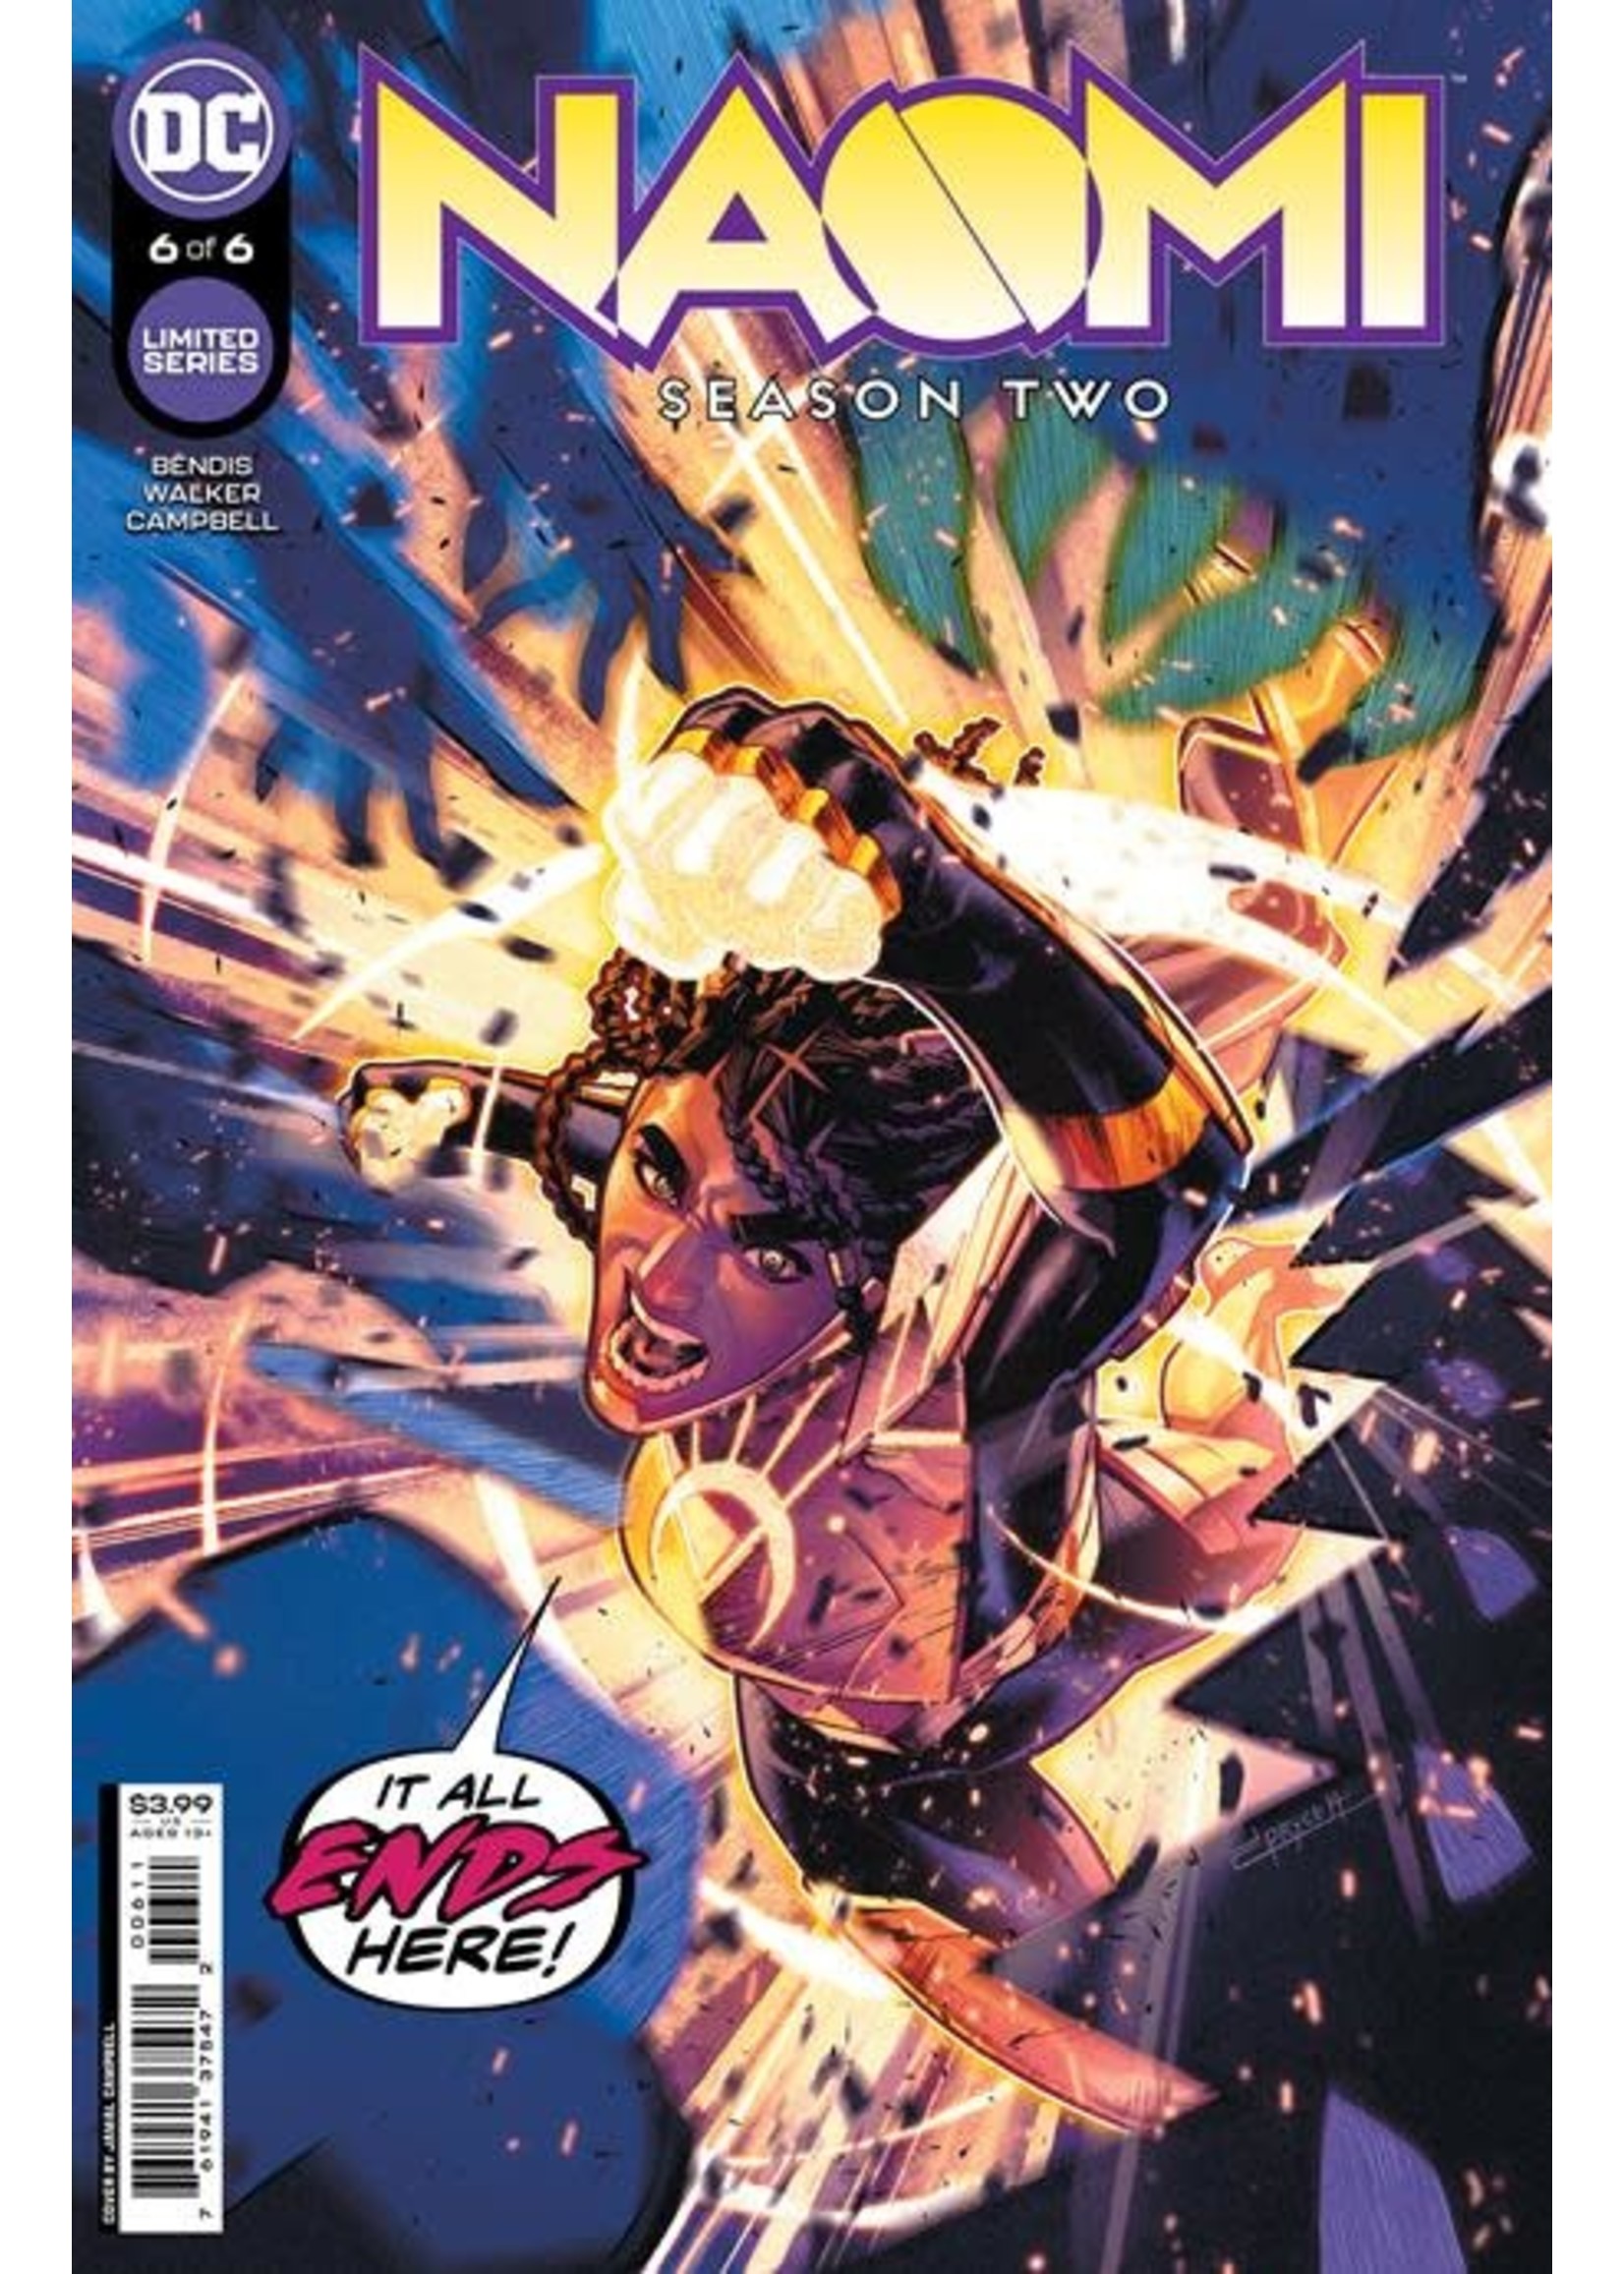 DC COMICS NAOMI SEASON 2 complete 6 issue series